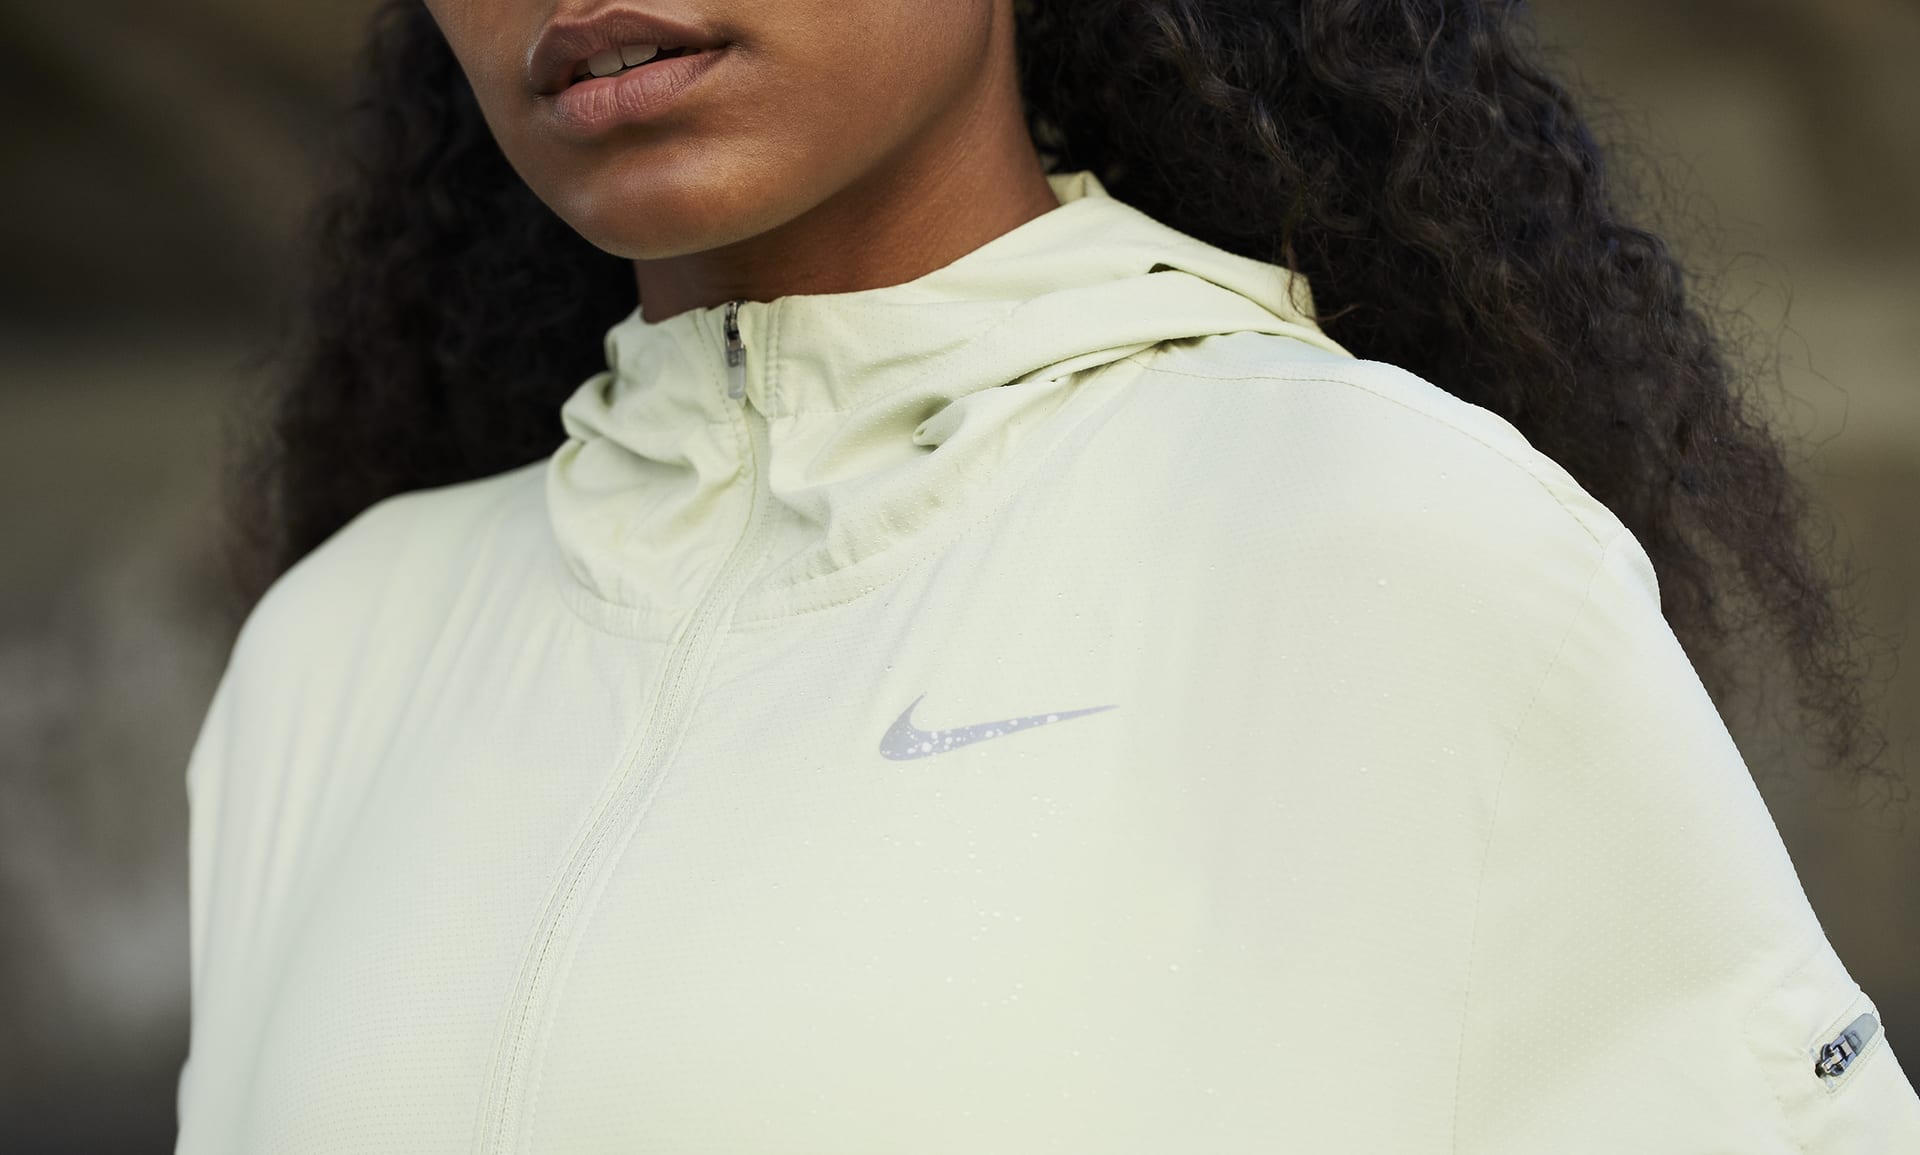 Nike Light Women's Hooded Jacket. Nike.com